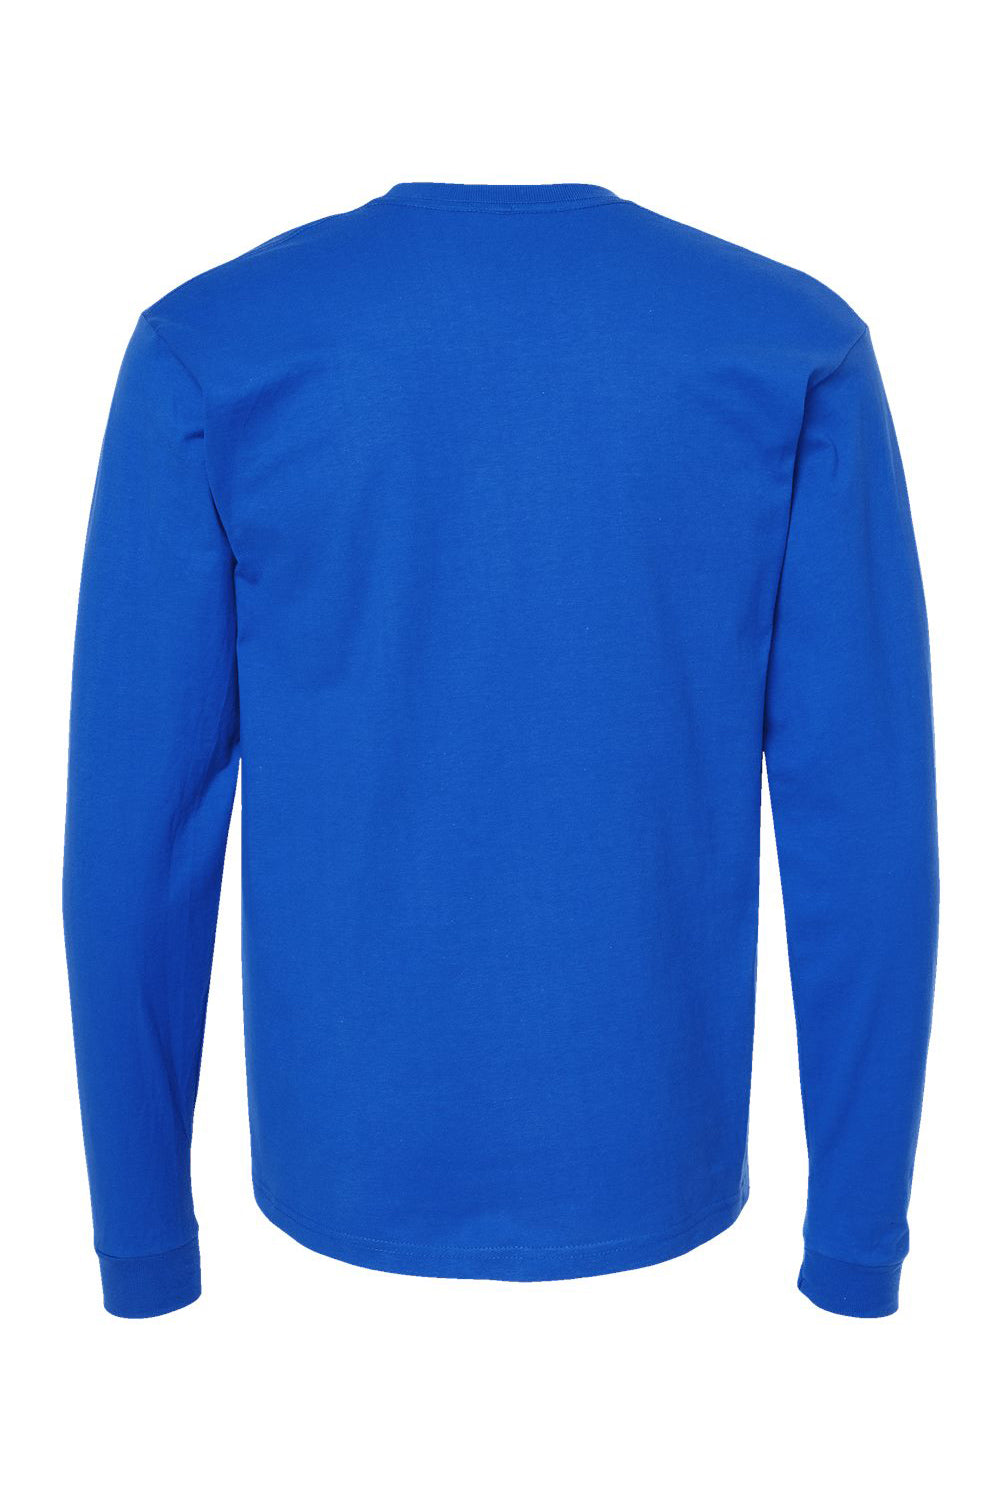 Tultex 291 Mens Jersey Long Sleeve Crewneck T-Shirt Royal Blue Flat Back